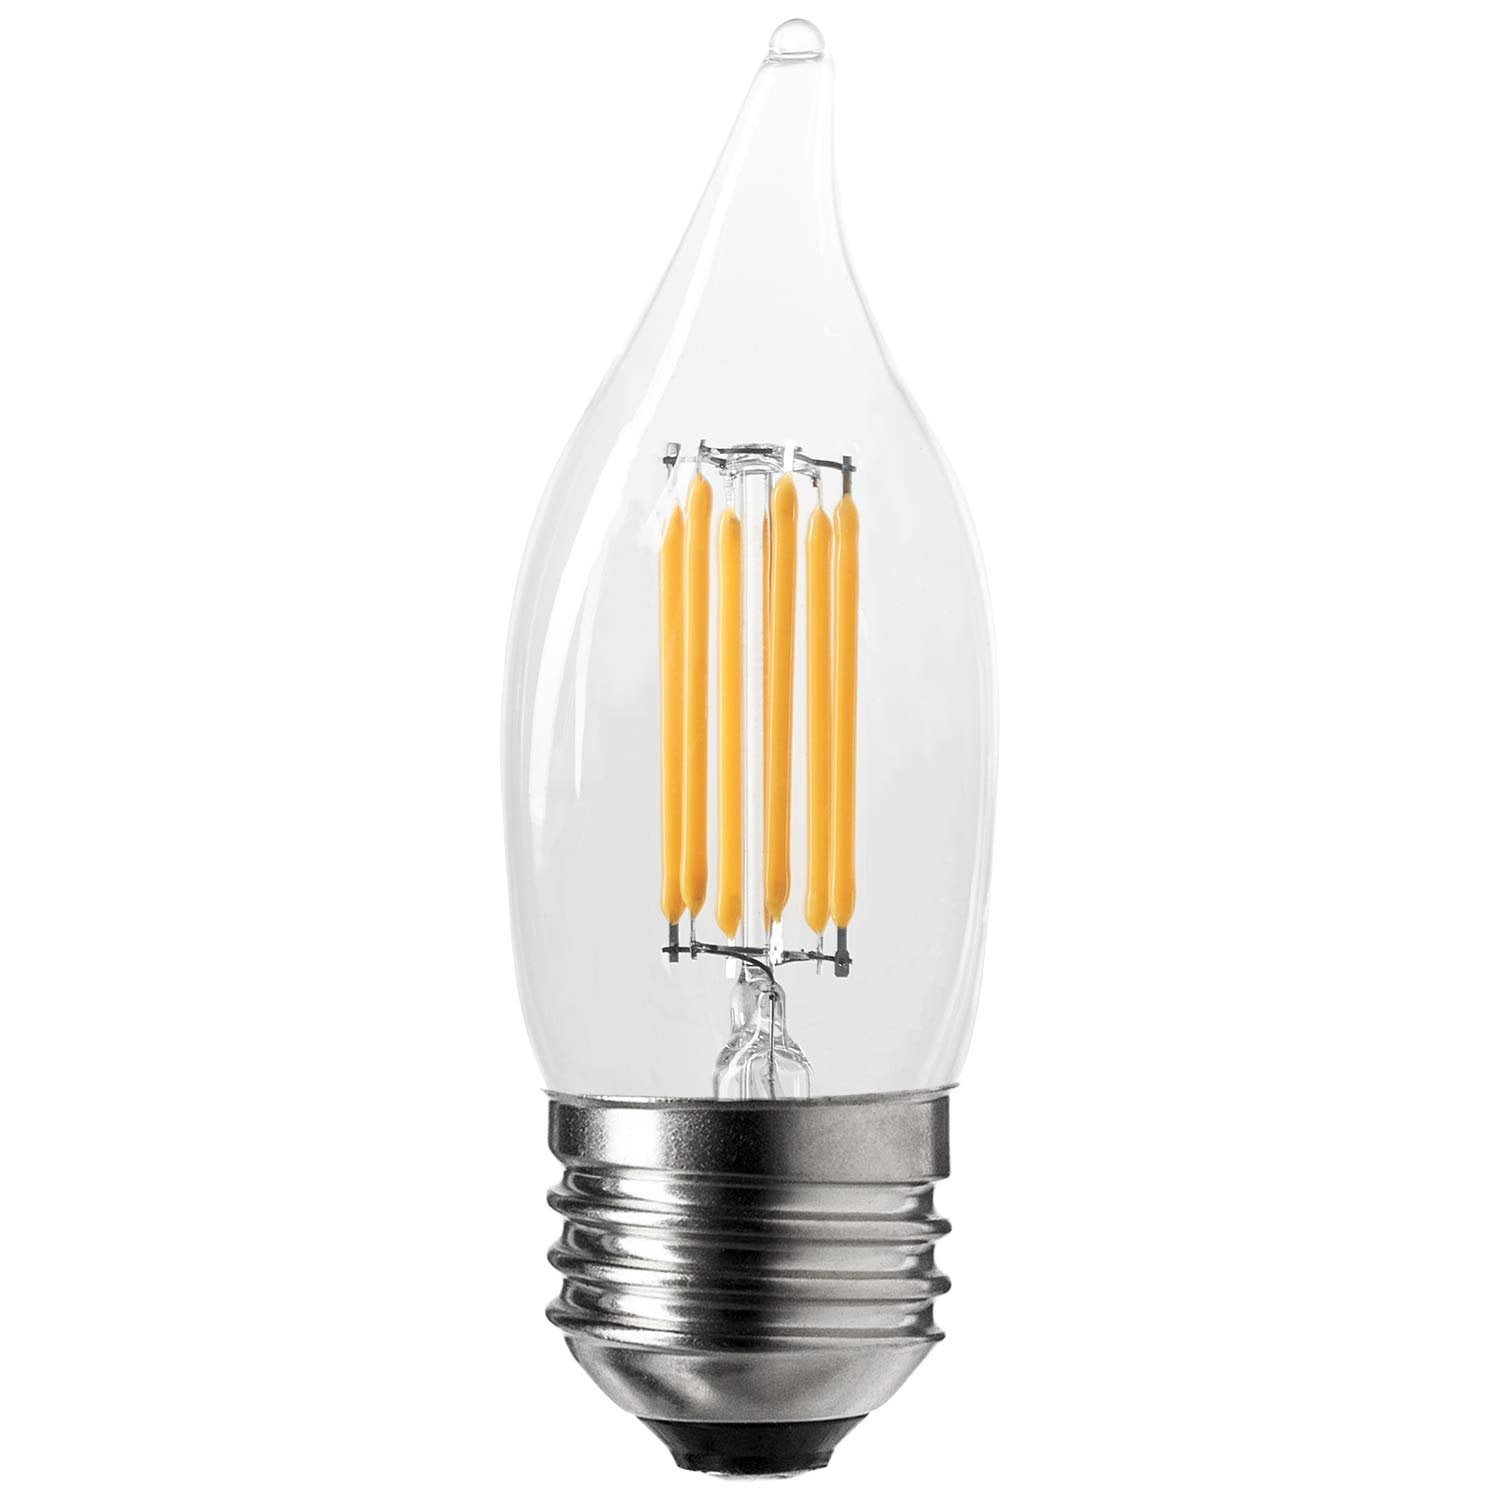 10x E12 LED Candelabra Bulb 110V Dimmable 3W 6W 9W High Power  Chandelier Light 